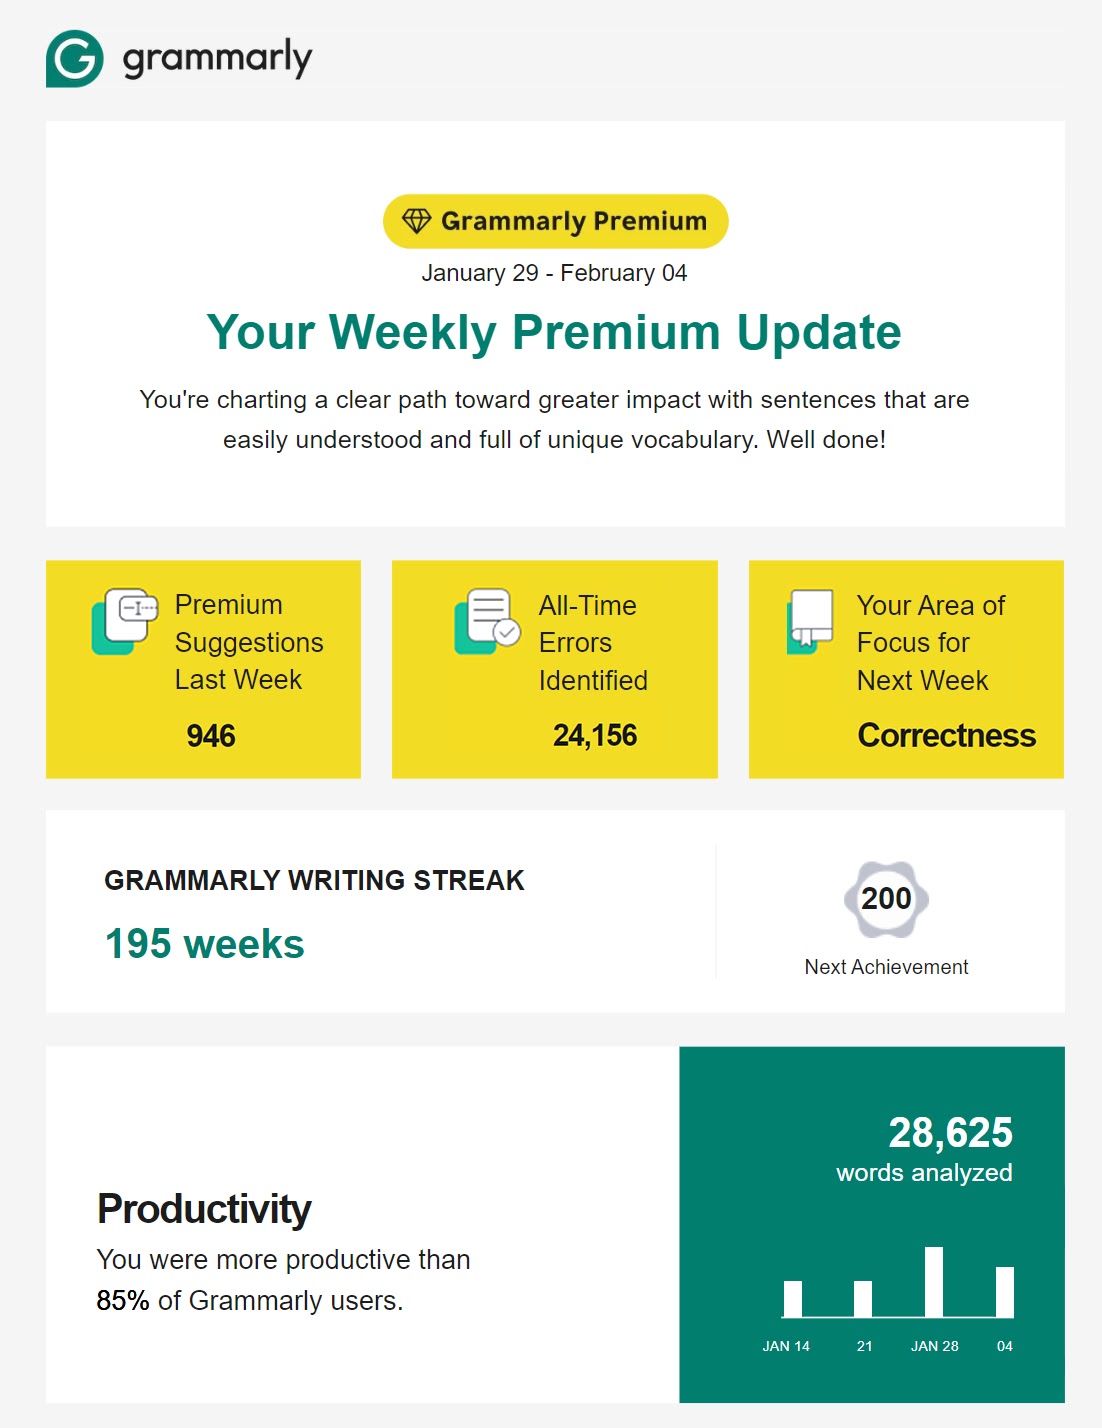 Grammarly's weekly premium update email